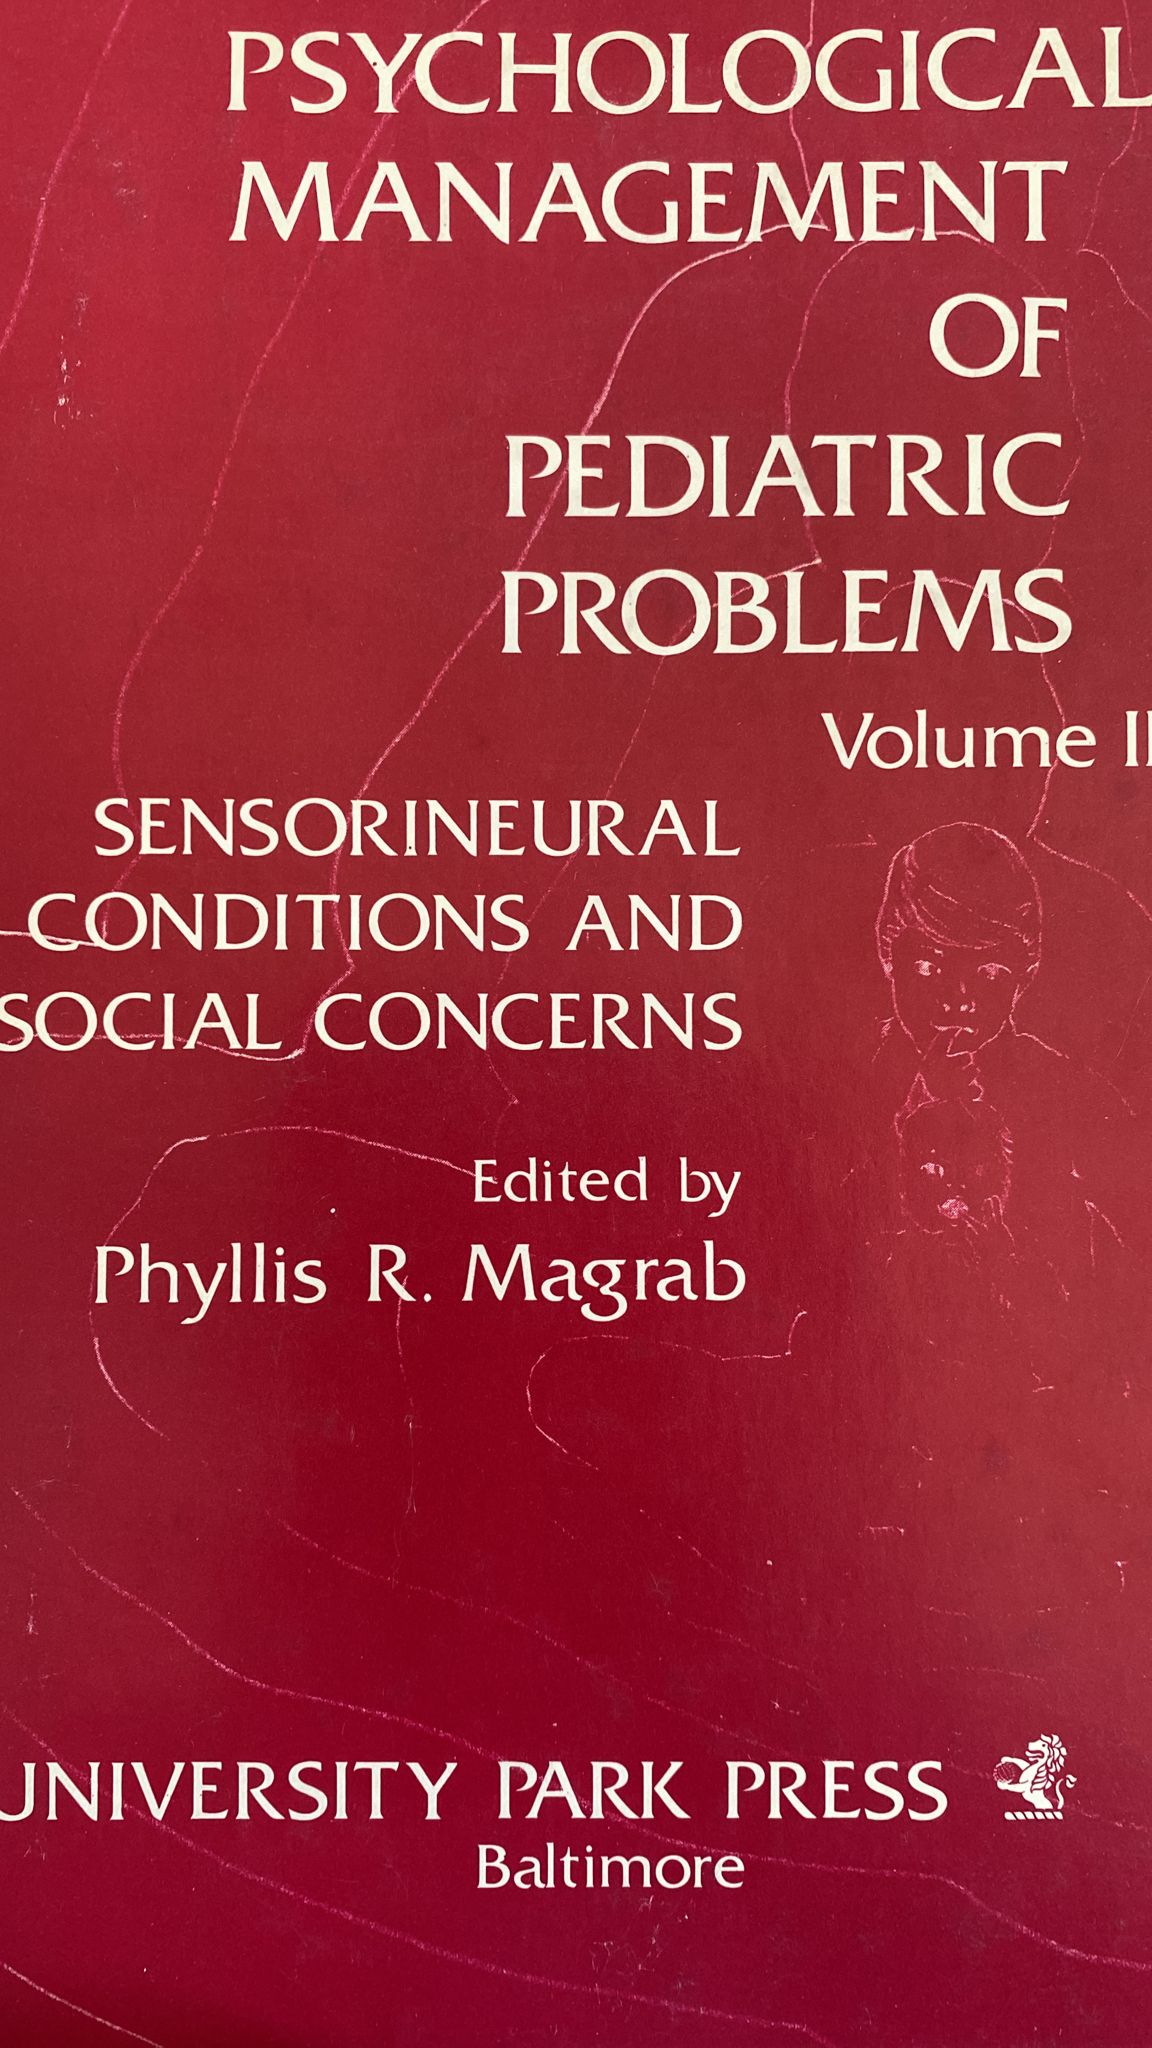 Psychological Manegement of Pediatric Problems